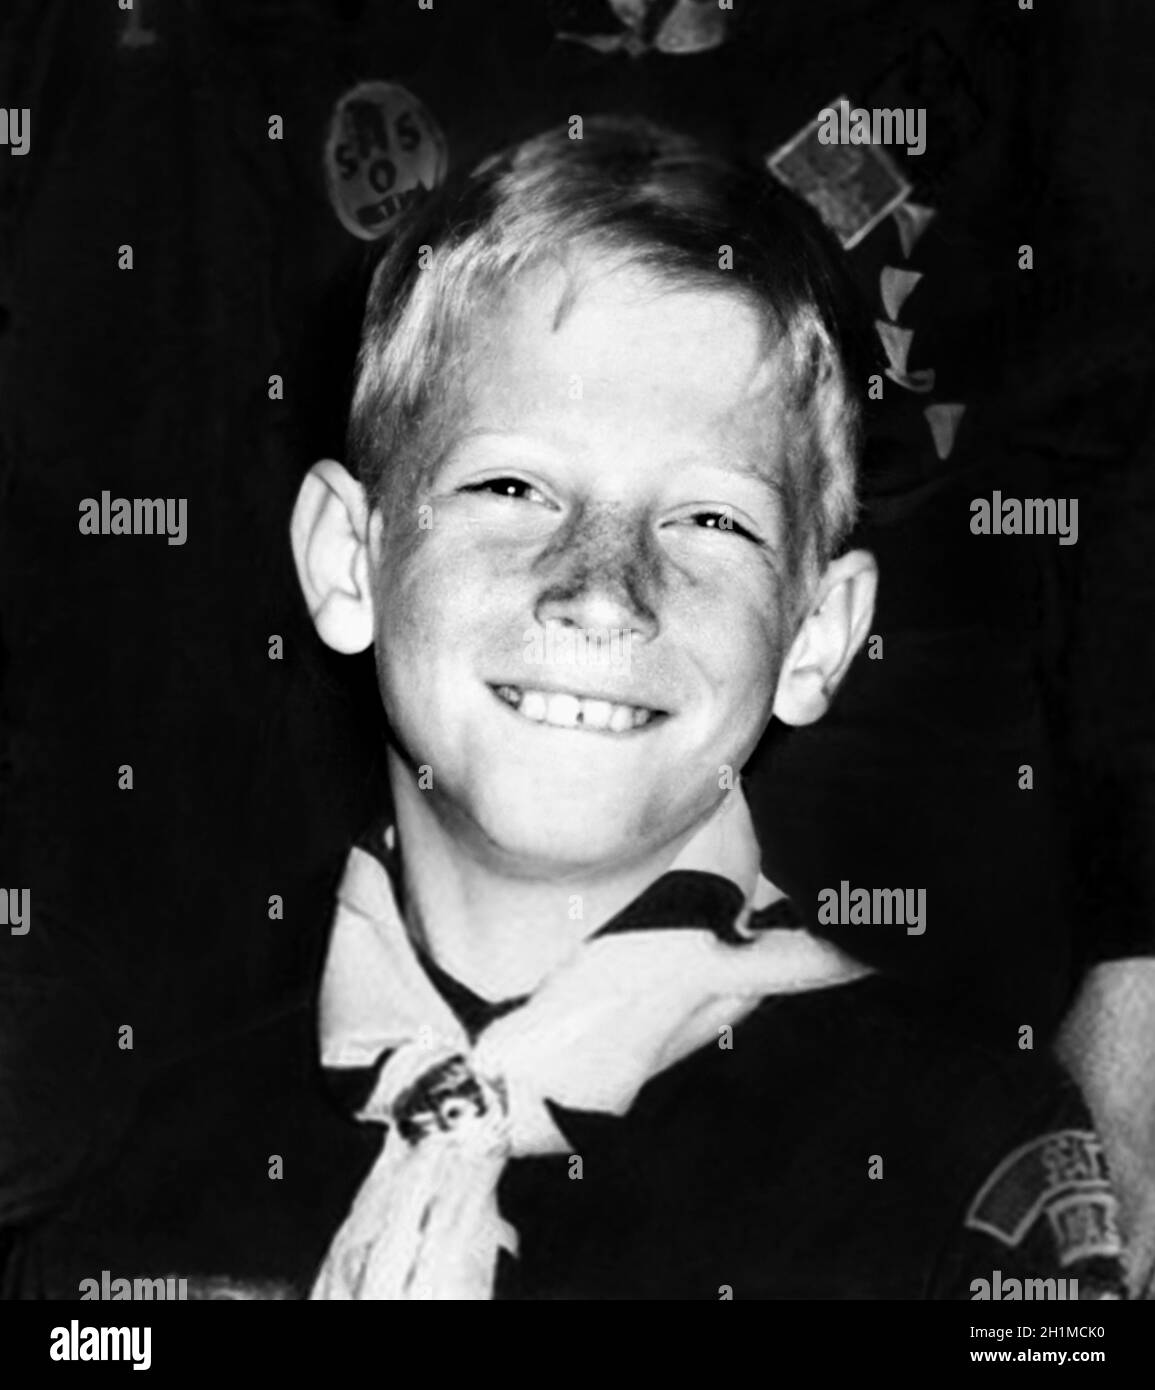 1965 ca, USA : The celebrated BILL GATES ( bo?rn in Seattle, 28 october 1955? ) when was a young boy aged 10  in a Boys Scouts group. American business magnate , investor and media proprietor founder of WINDOWS MICROSOFT company . Unknown photographer .- INFORMATICA - INFORMATICO - INFORMATICS - COMPUTER TECHNOLOGY - INVENTORE - INVENTOR - HISTORY - FOTO STORICHE - TYCOON - personalità da bambino bambini da giovane - personality personalities when was young - INFANZIA - CHILDHOOD - BAMBINO - BAMBINI - CHILDREN - CHILD - smile - sorriso --- ARCHIVIO GBB Stock Photo